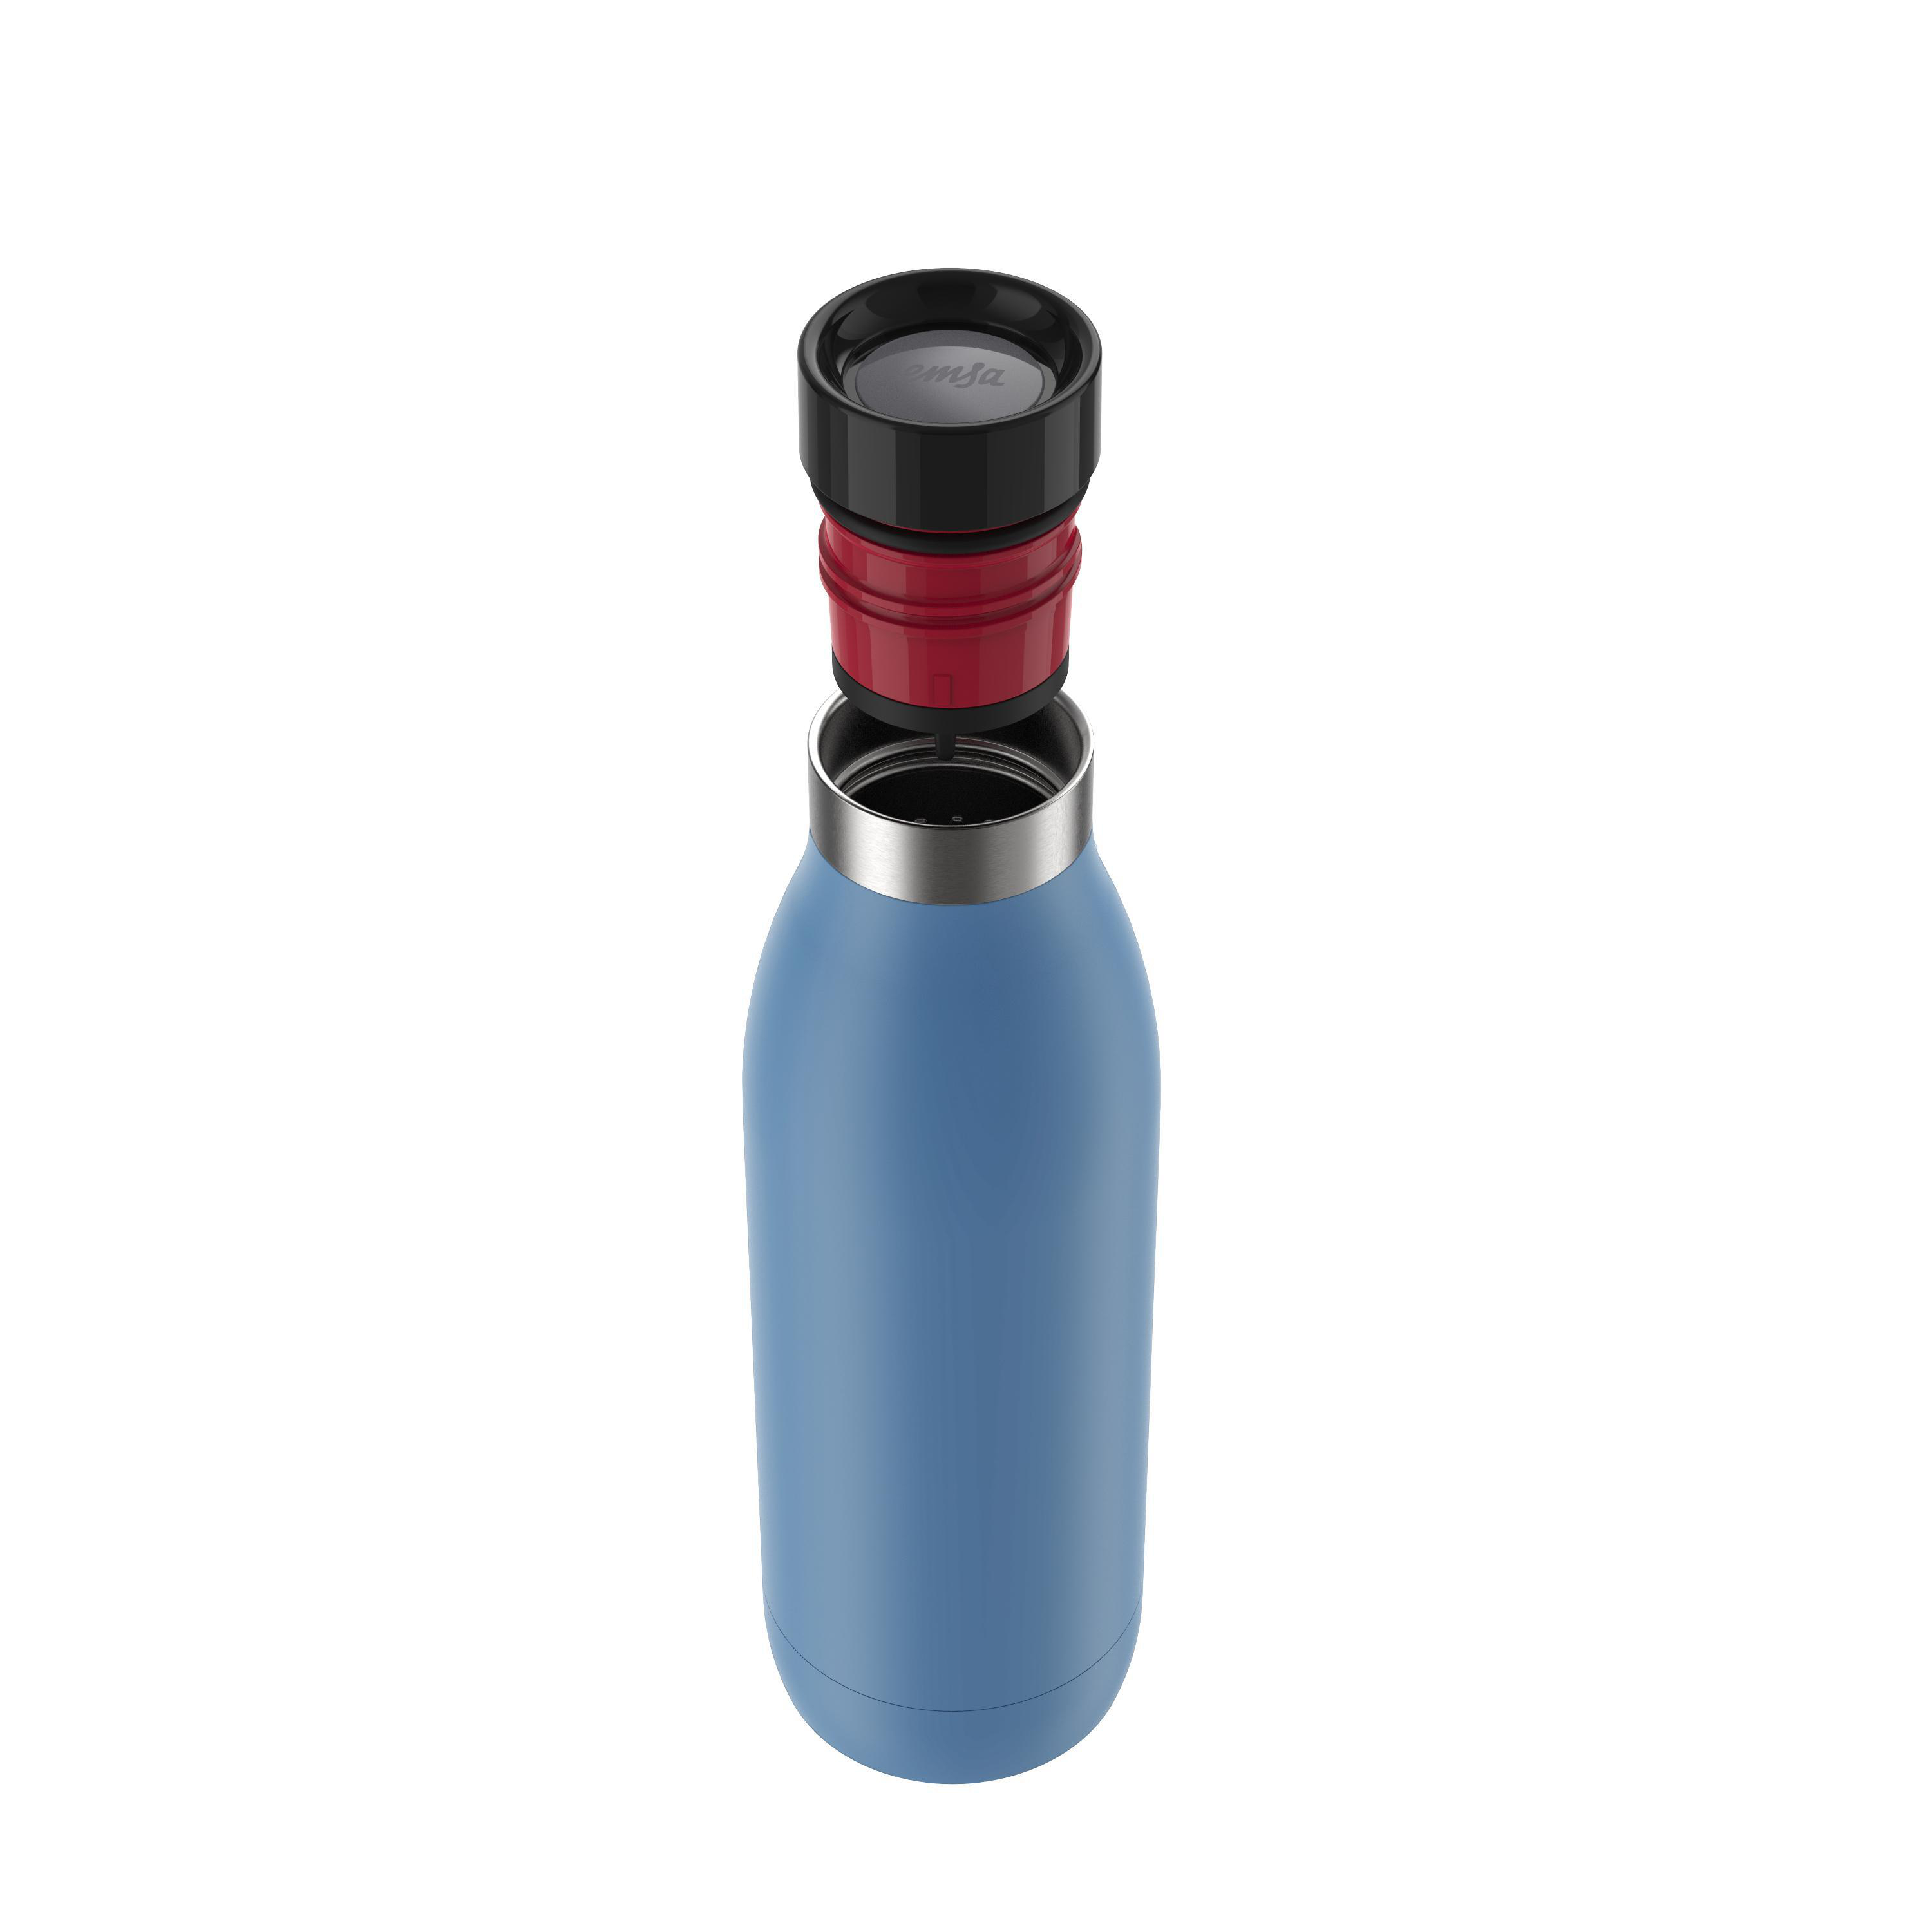 EMSA N31103 Bludrop Color Trinkflasche Blau